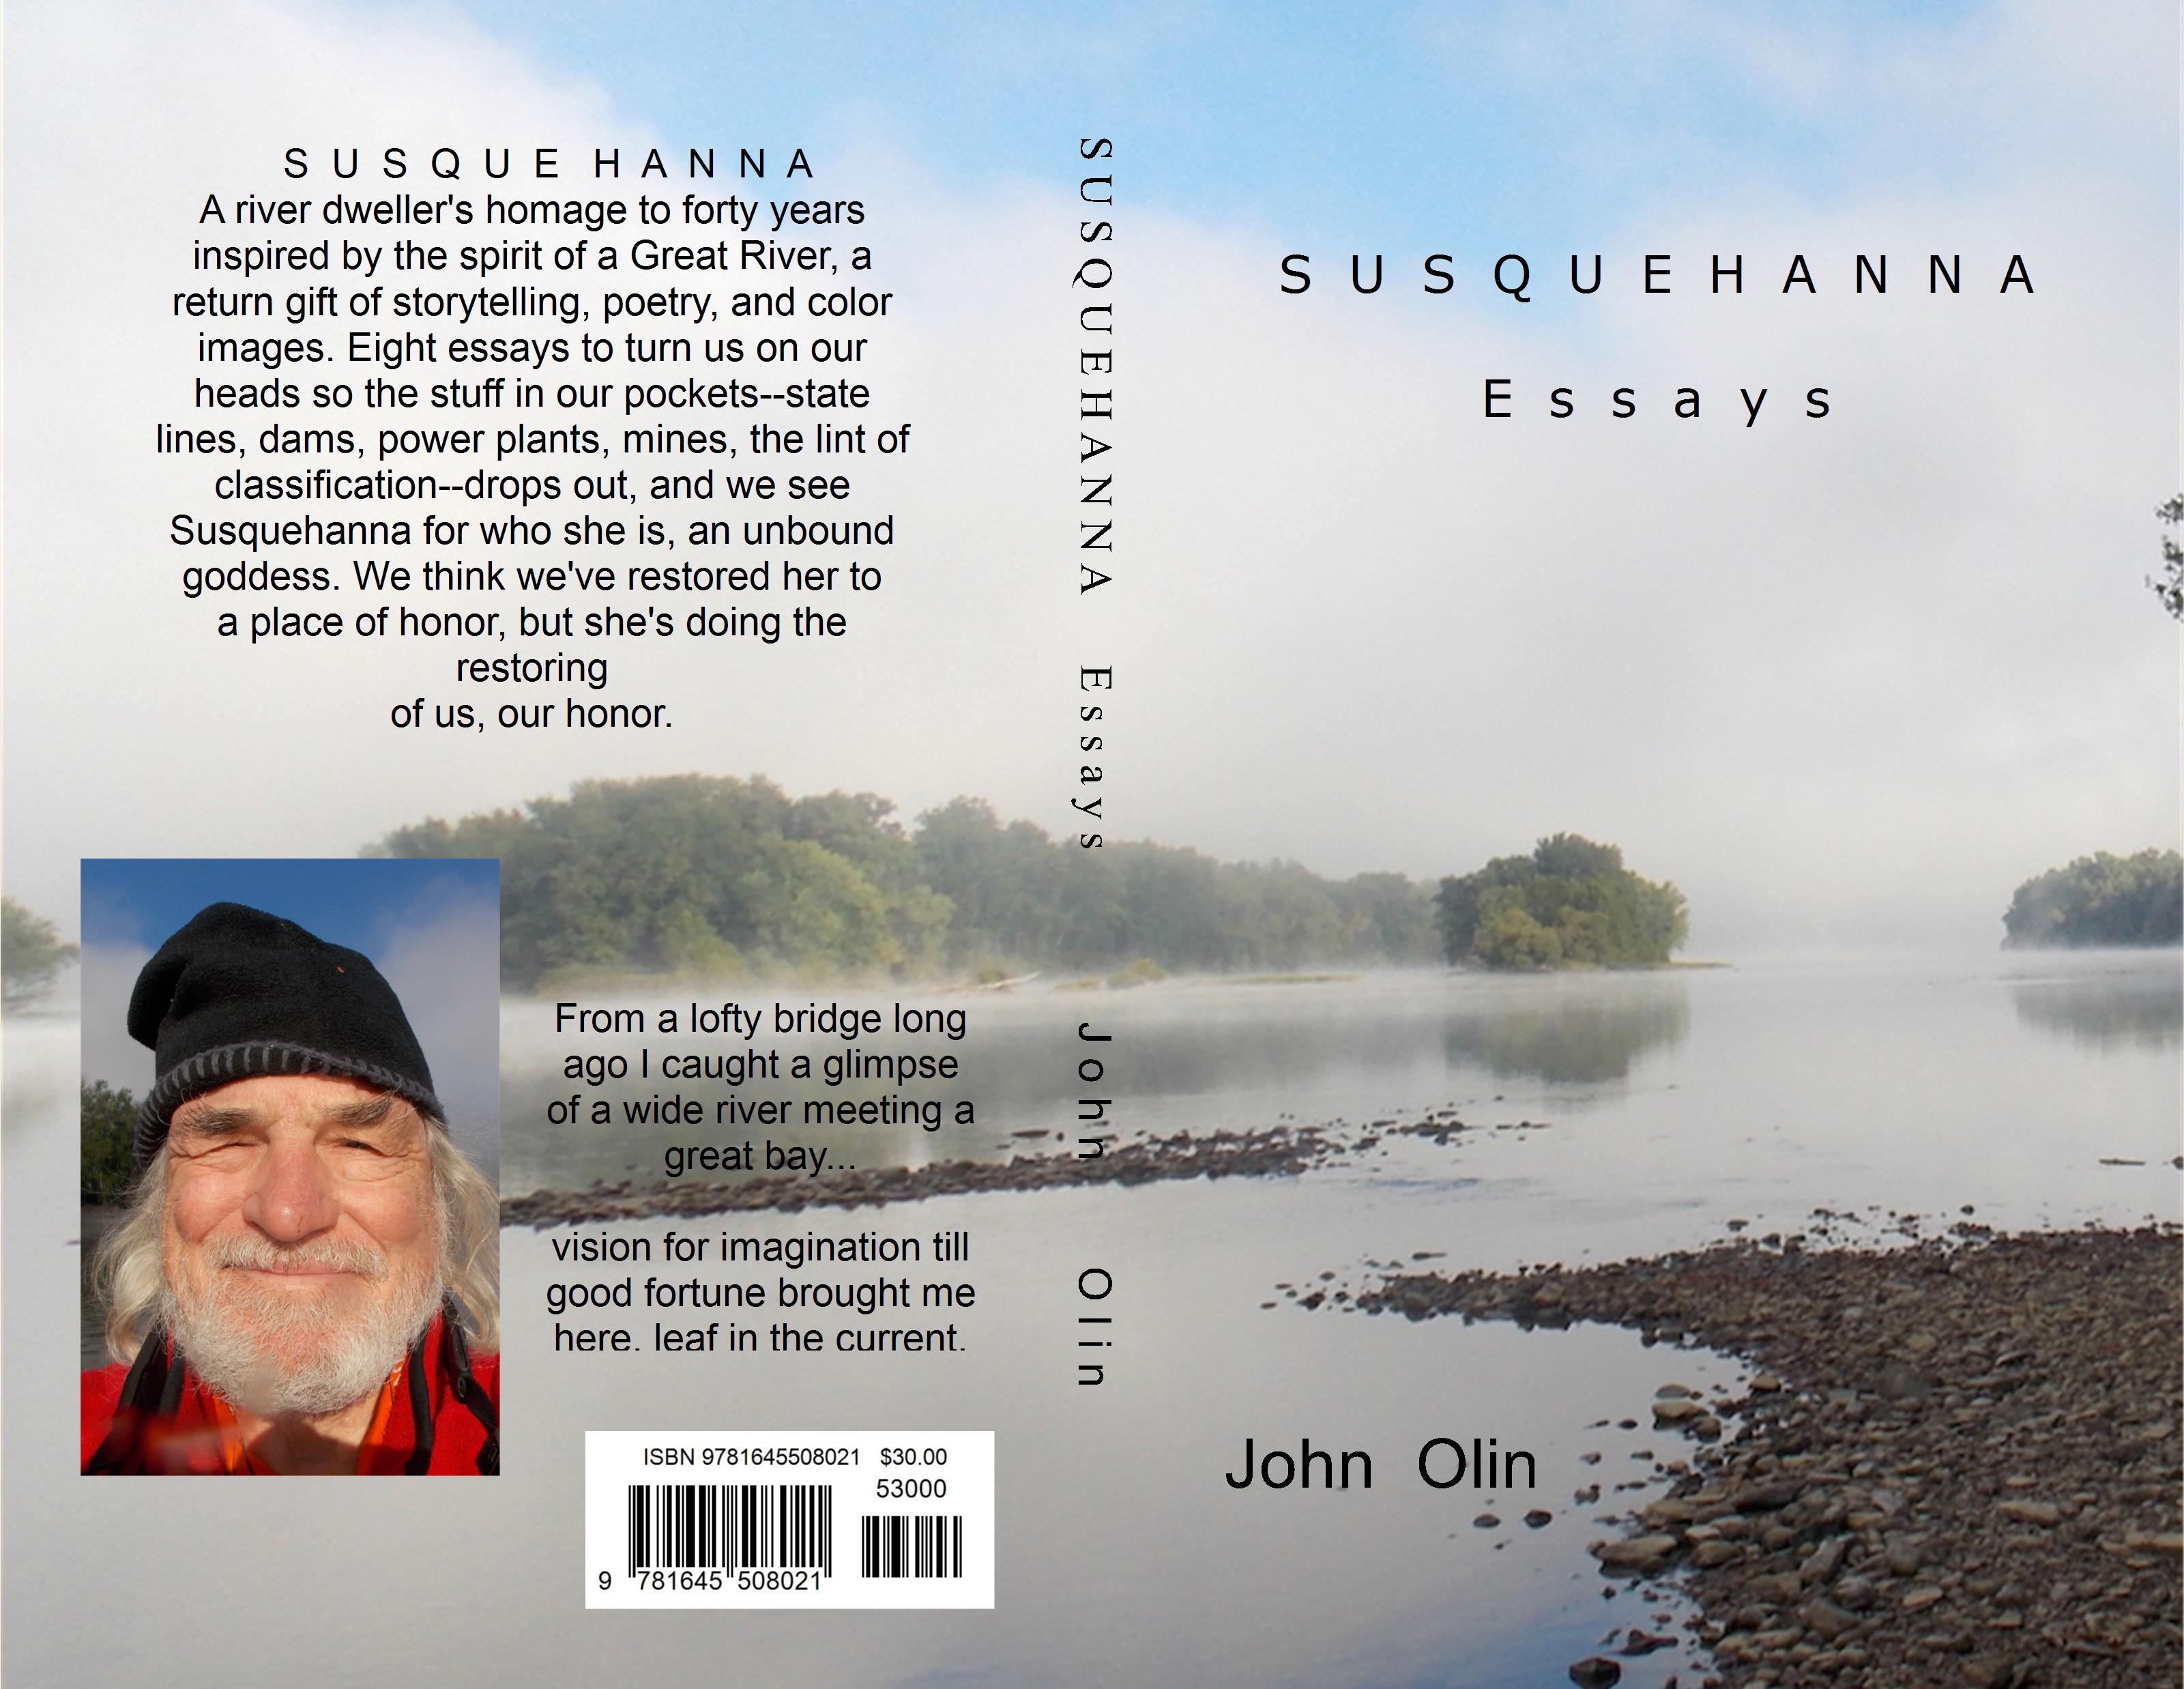  Susquehanna essays cover image